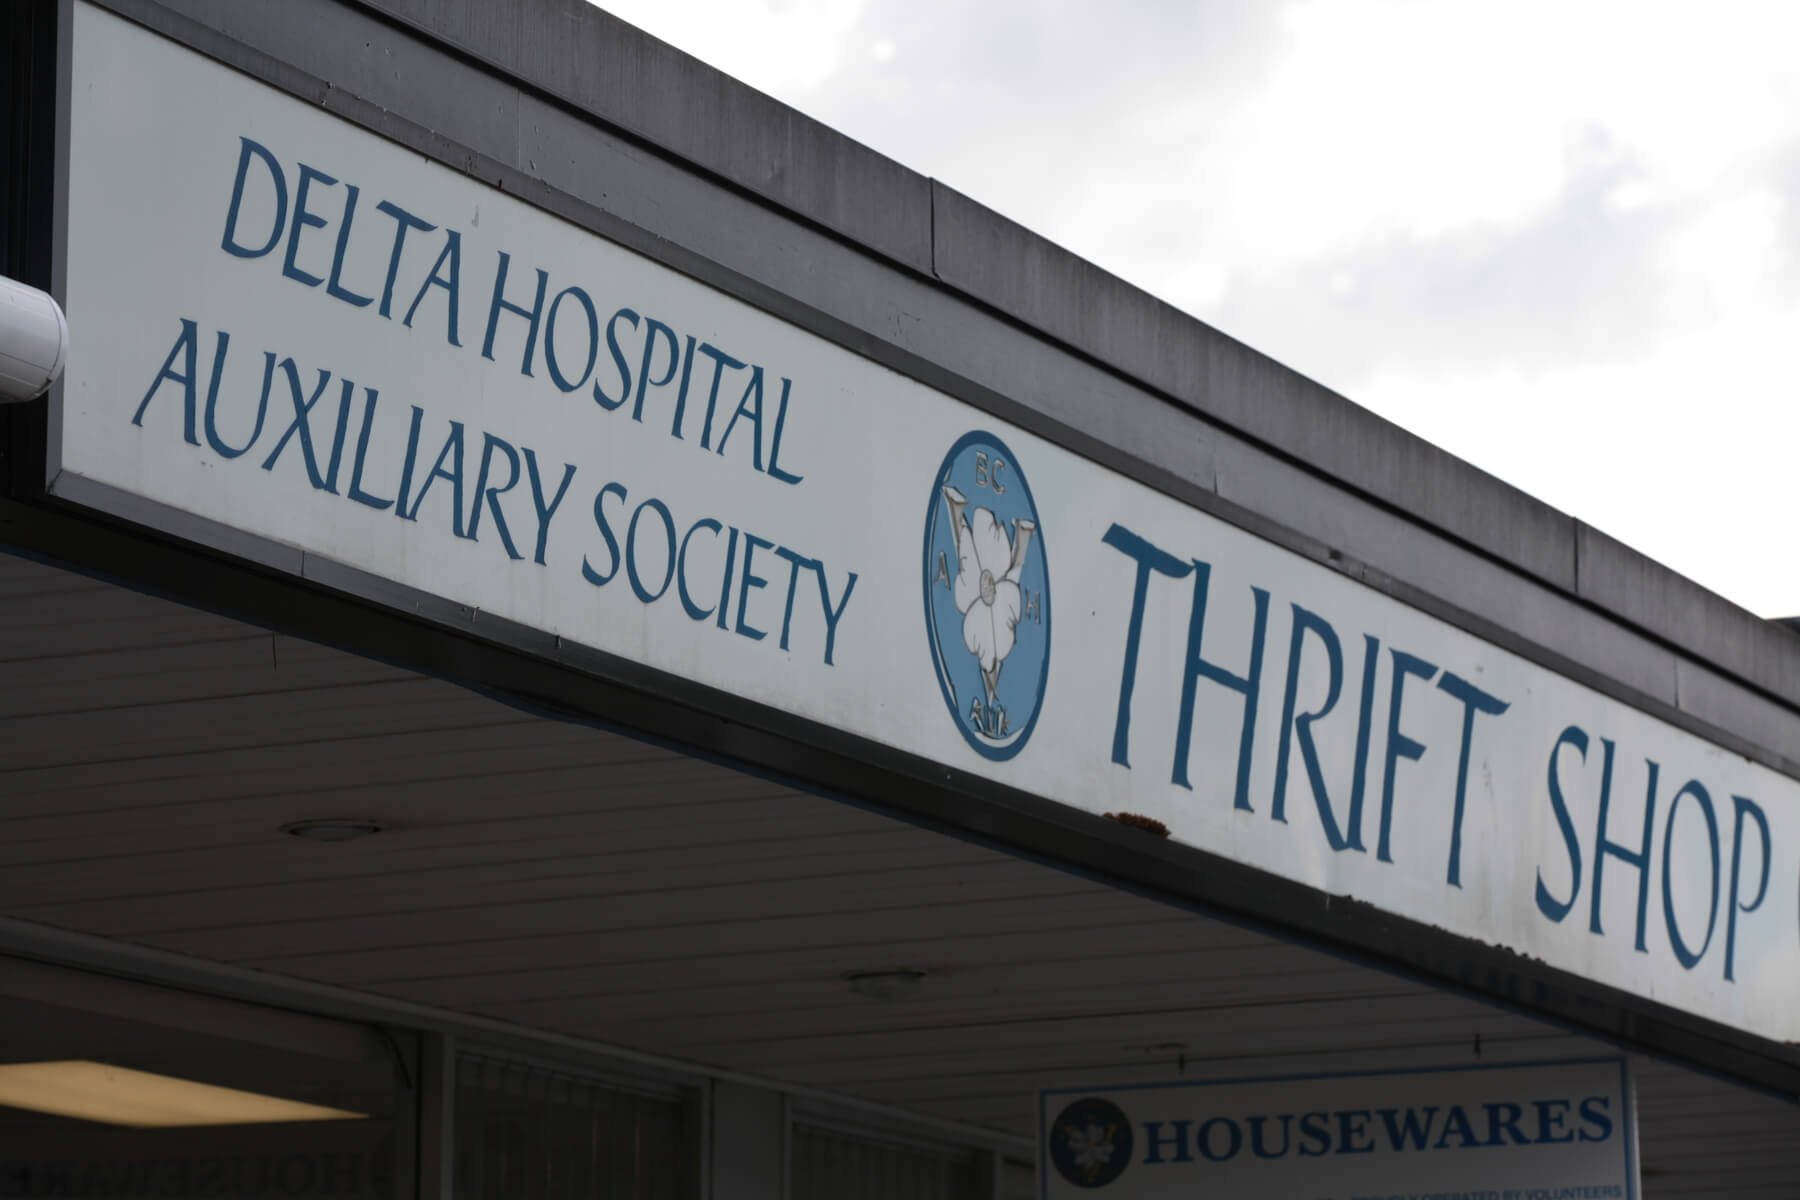 Delta Hospital Auxiliary Society – Thrift Shop